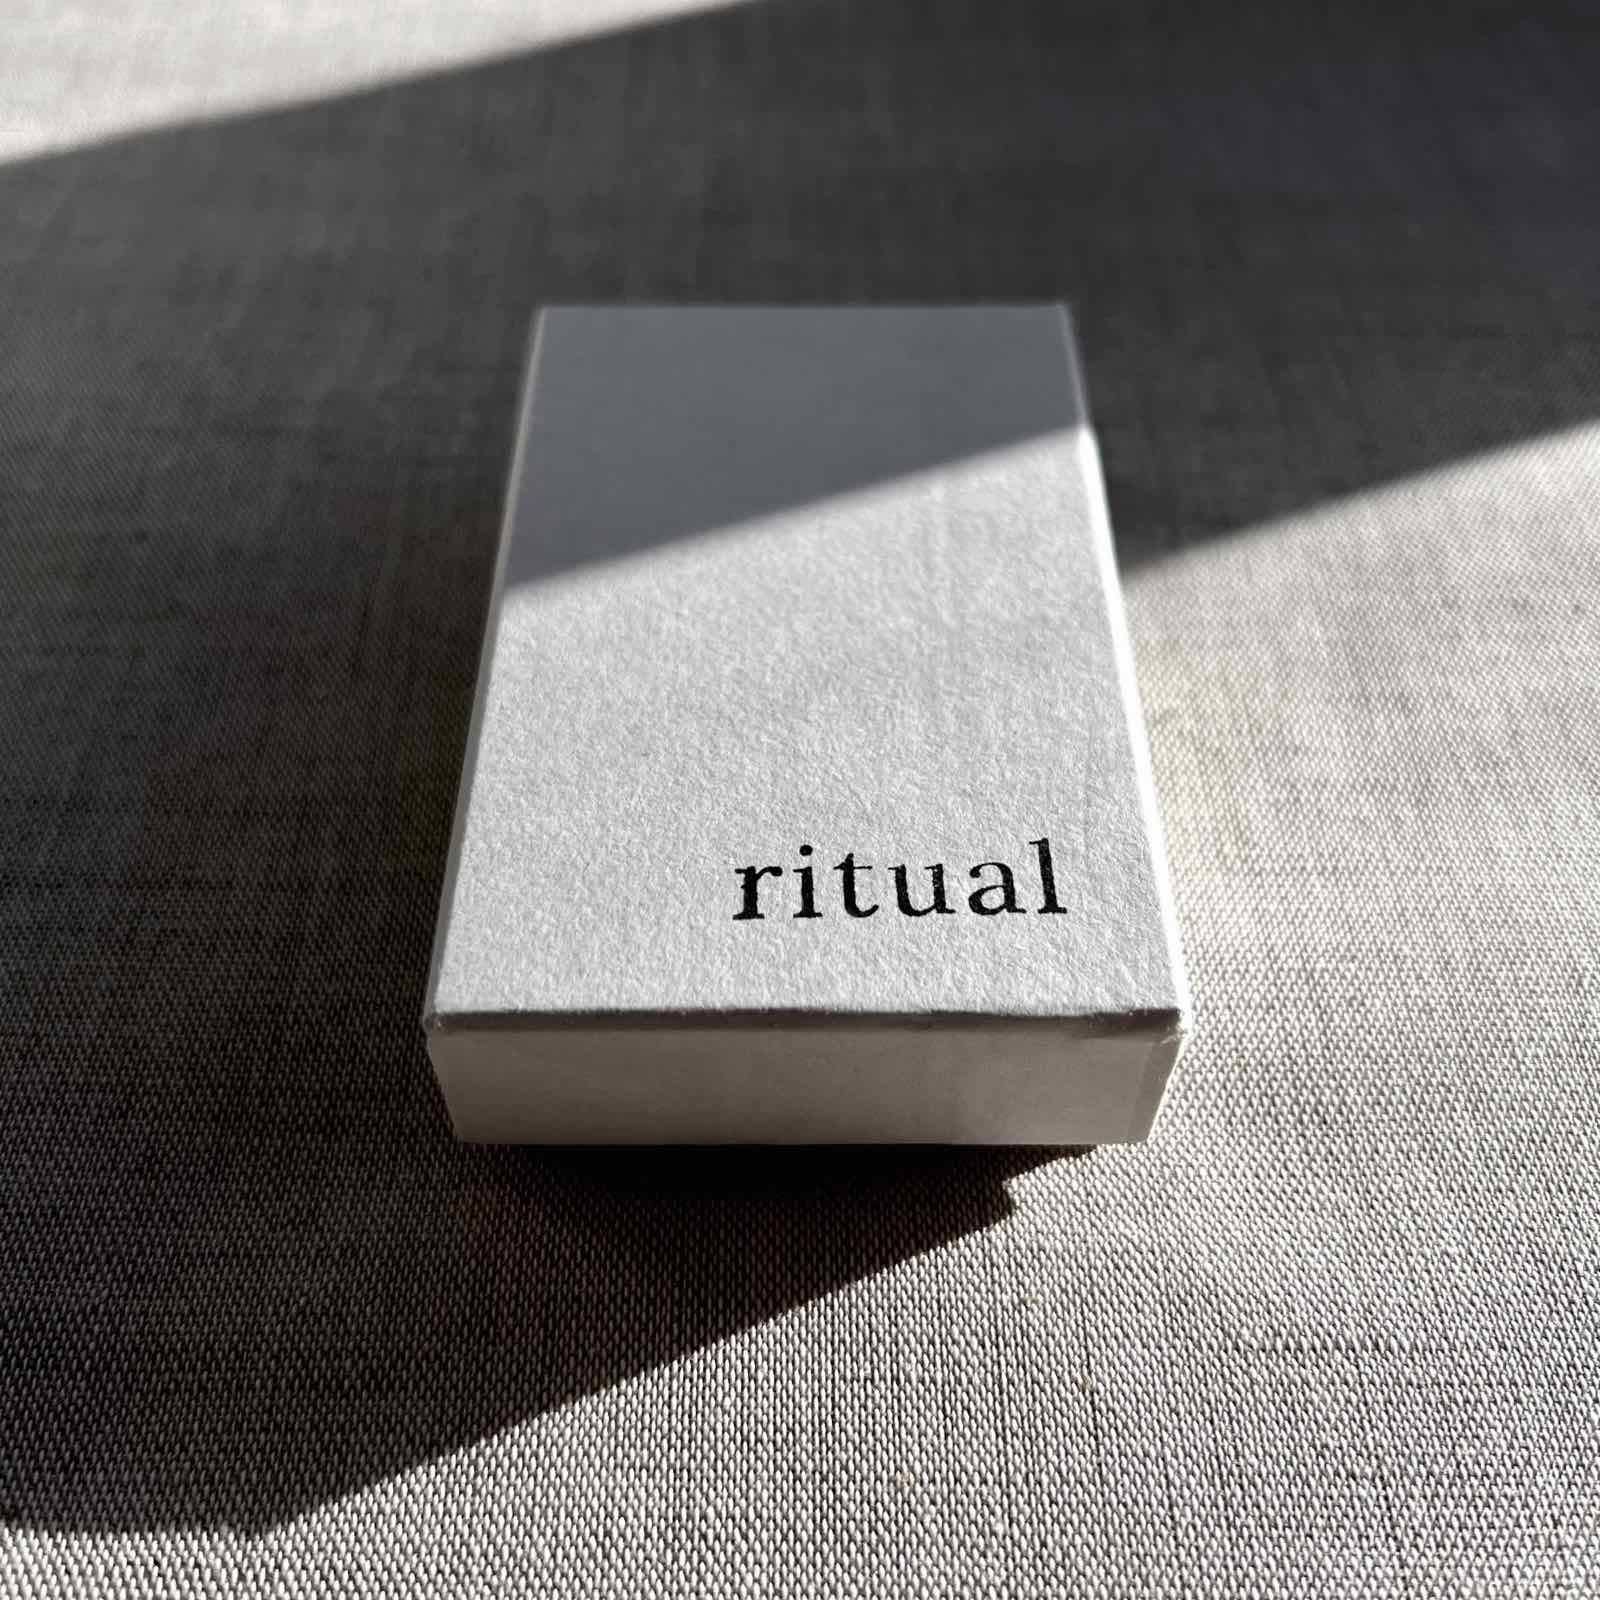 Ritual candle gift set